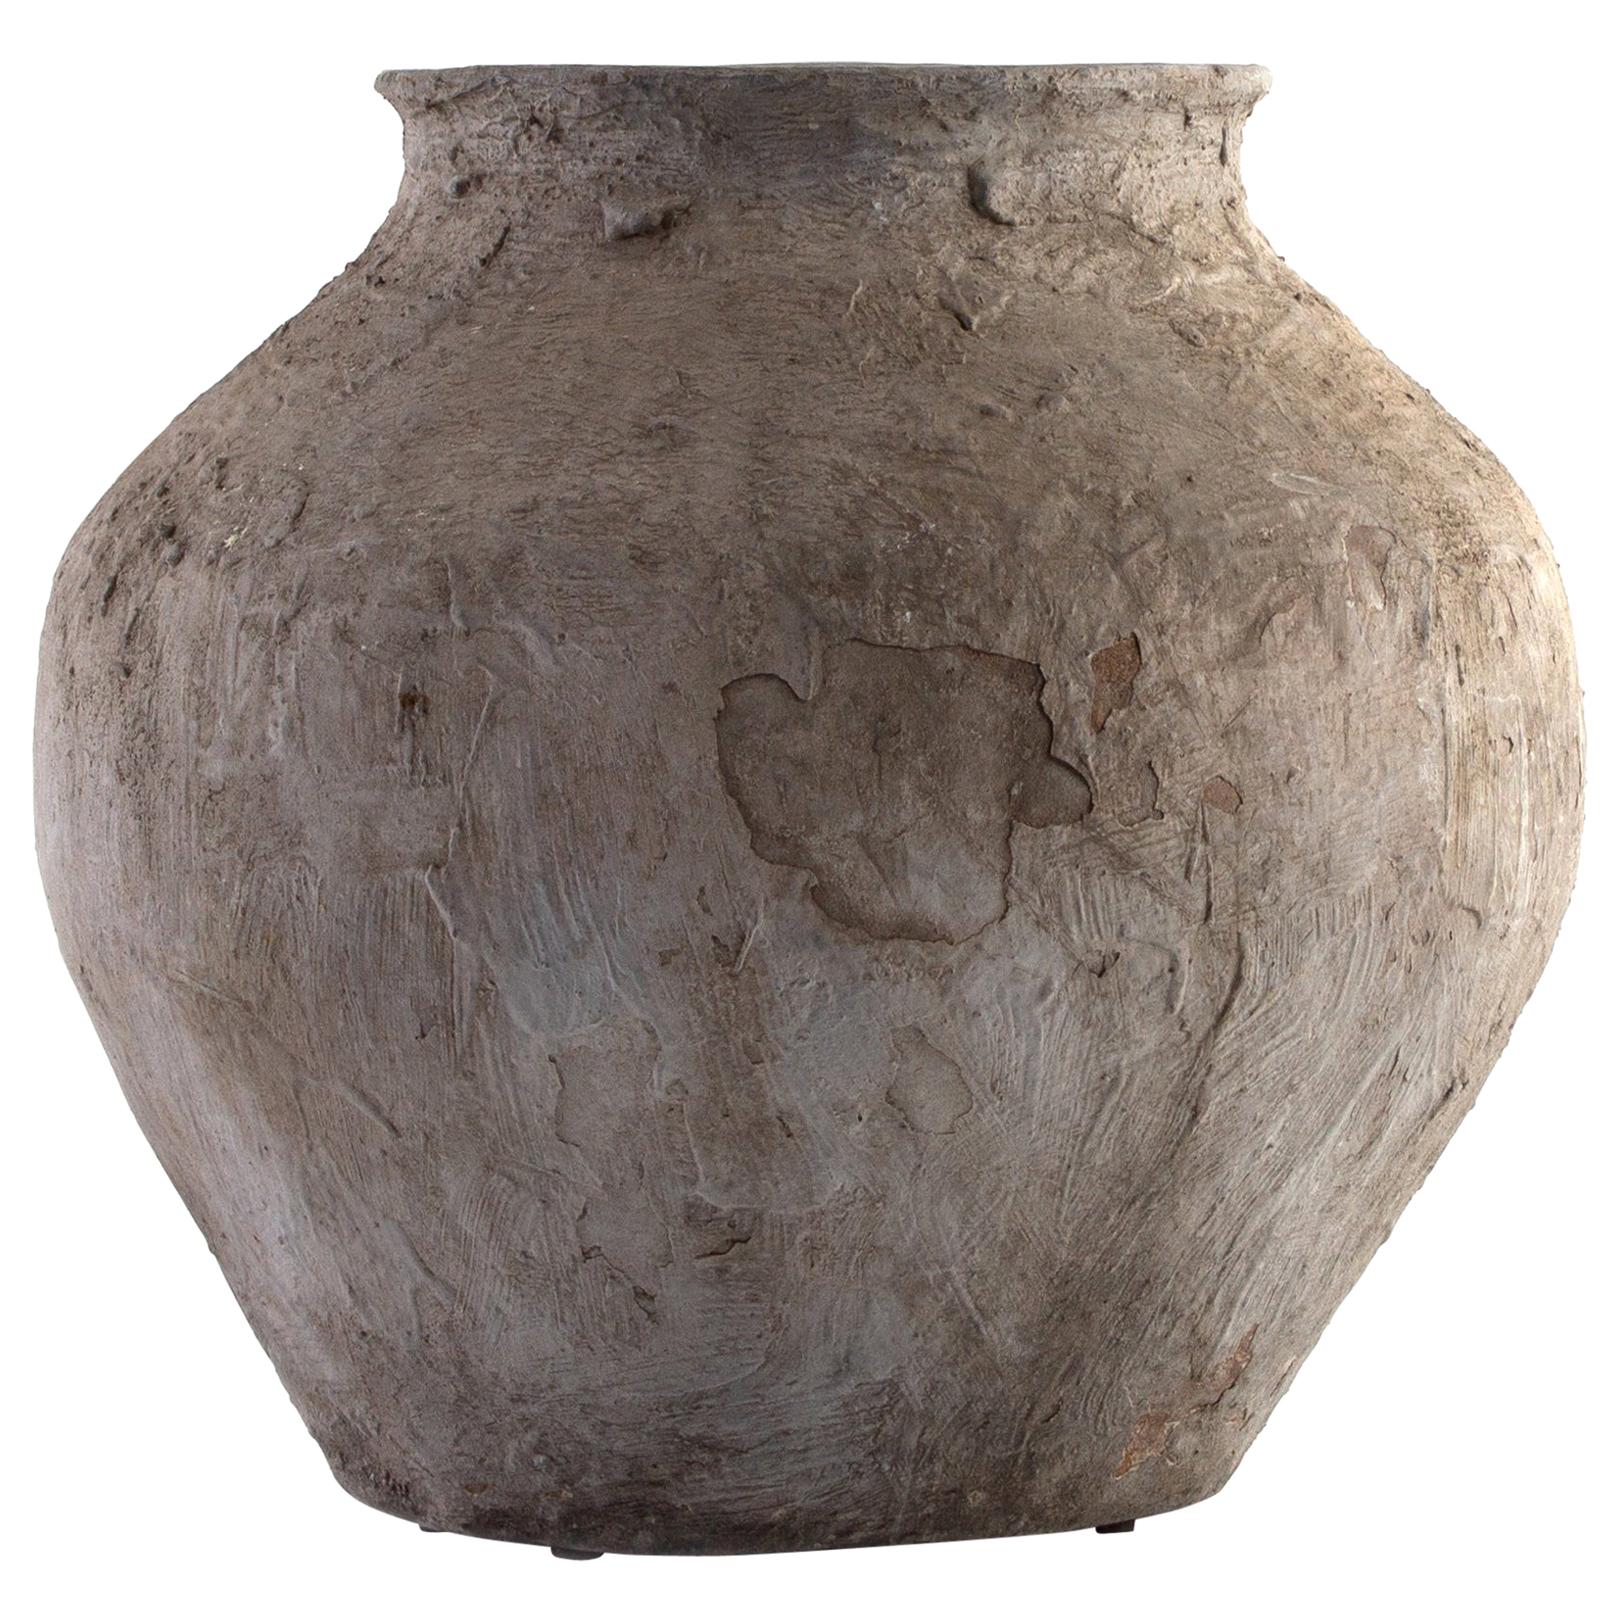 Vintage South Asian Terracotta Storage Jar